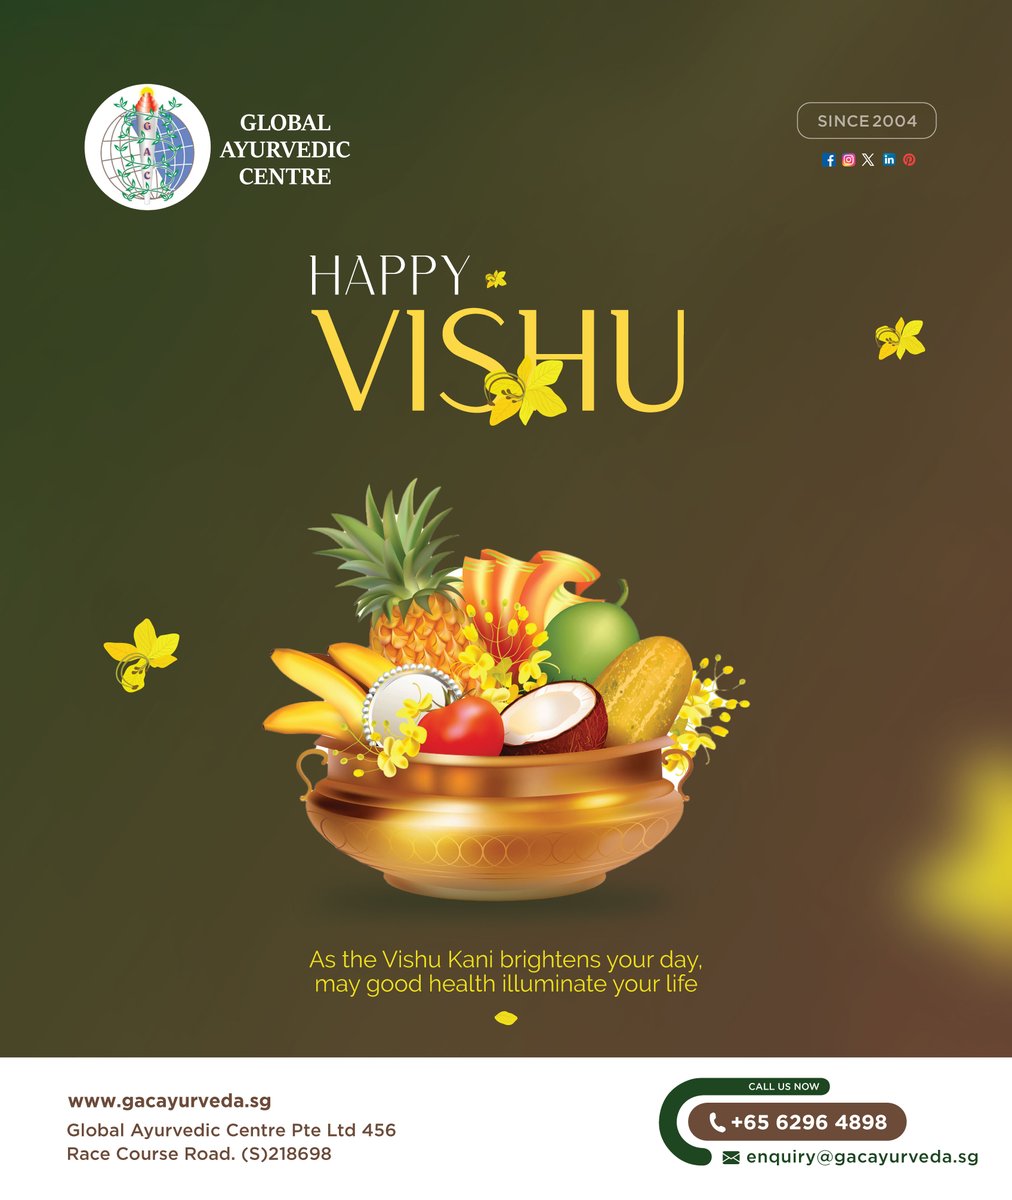 Happy Vishu! May your home be filled with laughter and your heart with contentment.
.
.
.
#HappyVishu #VishuWishes #FestivalOfKerala #NewBeginnings #Prosperity #Joy #Blessings #Tradition #Celebration #Harmony #FamilyTime #KeralaCulture #FestiveSeason #KeralaFestival #VishuKani